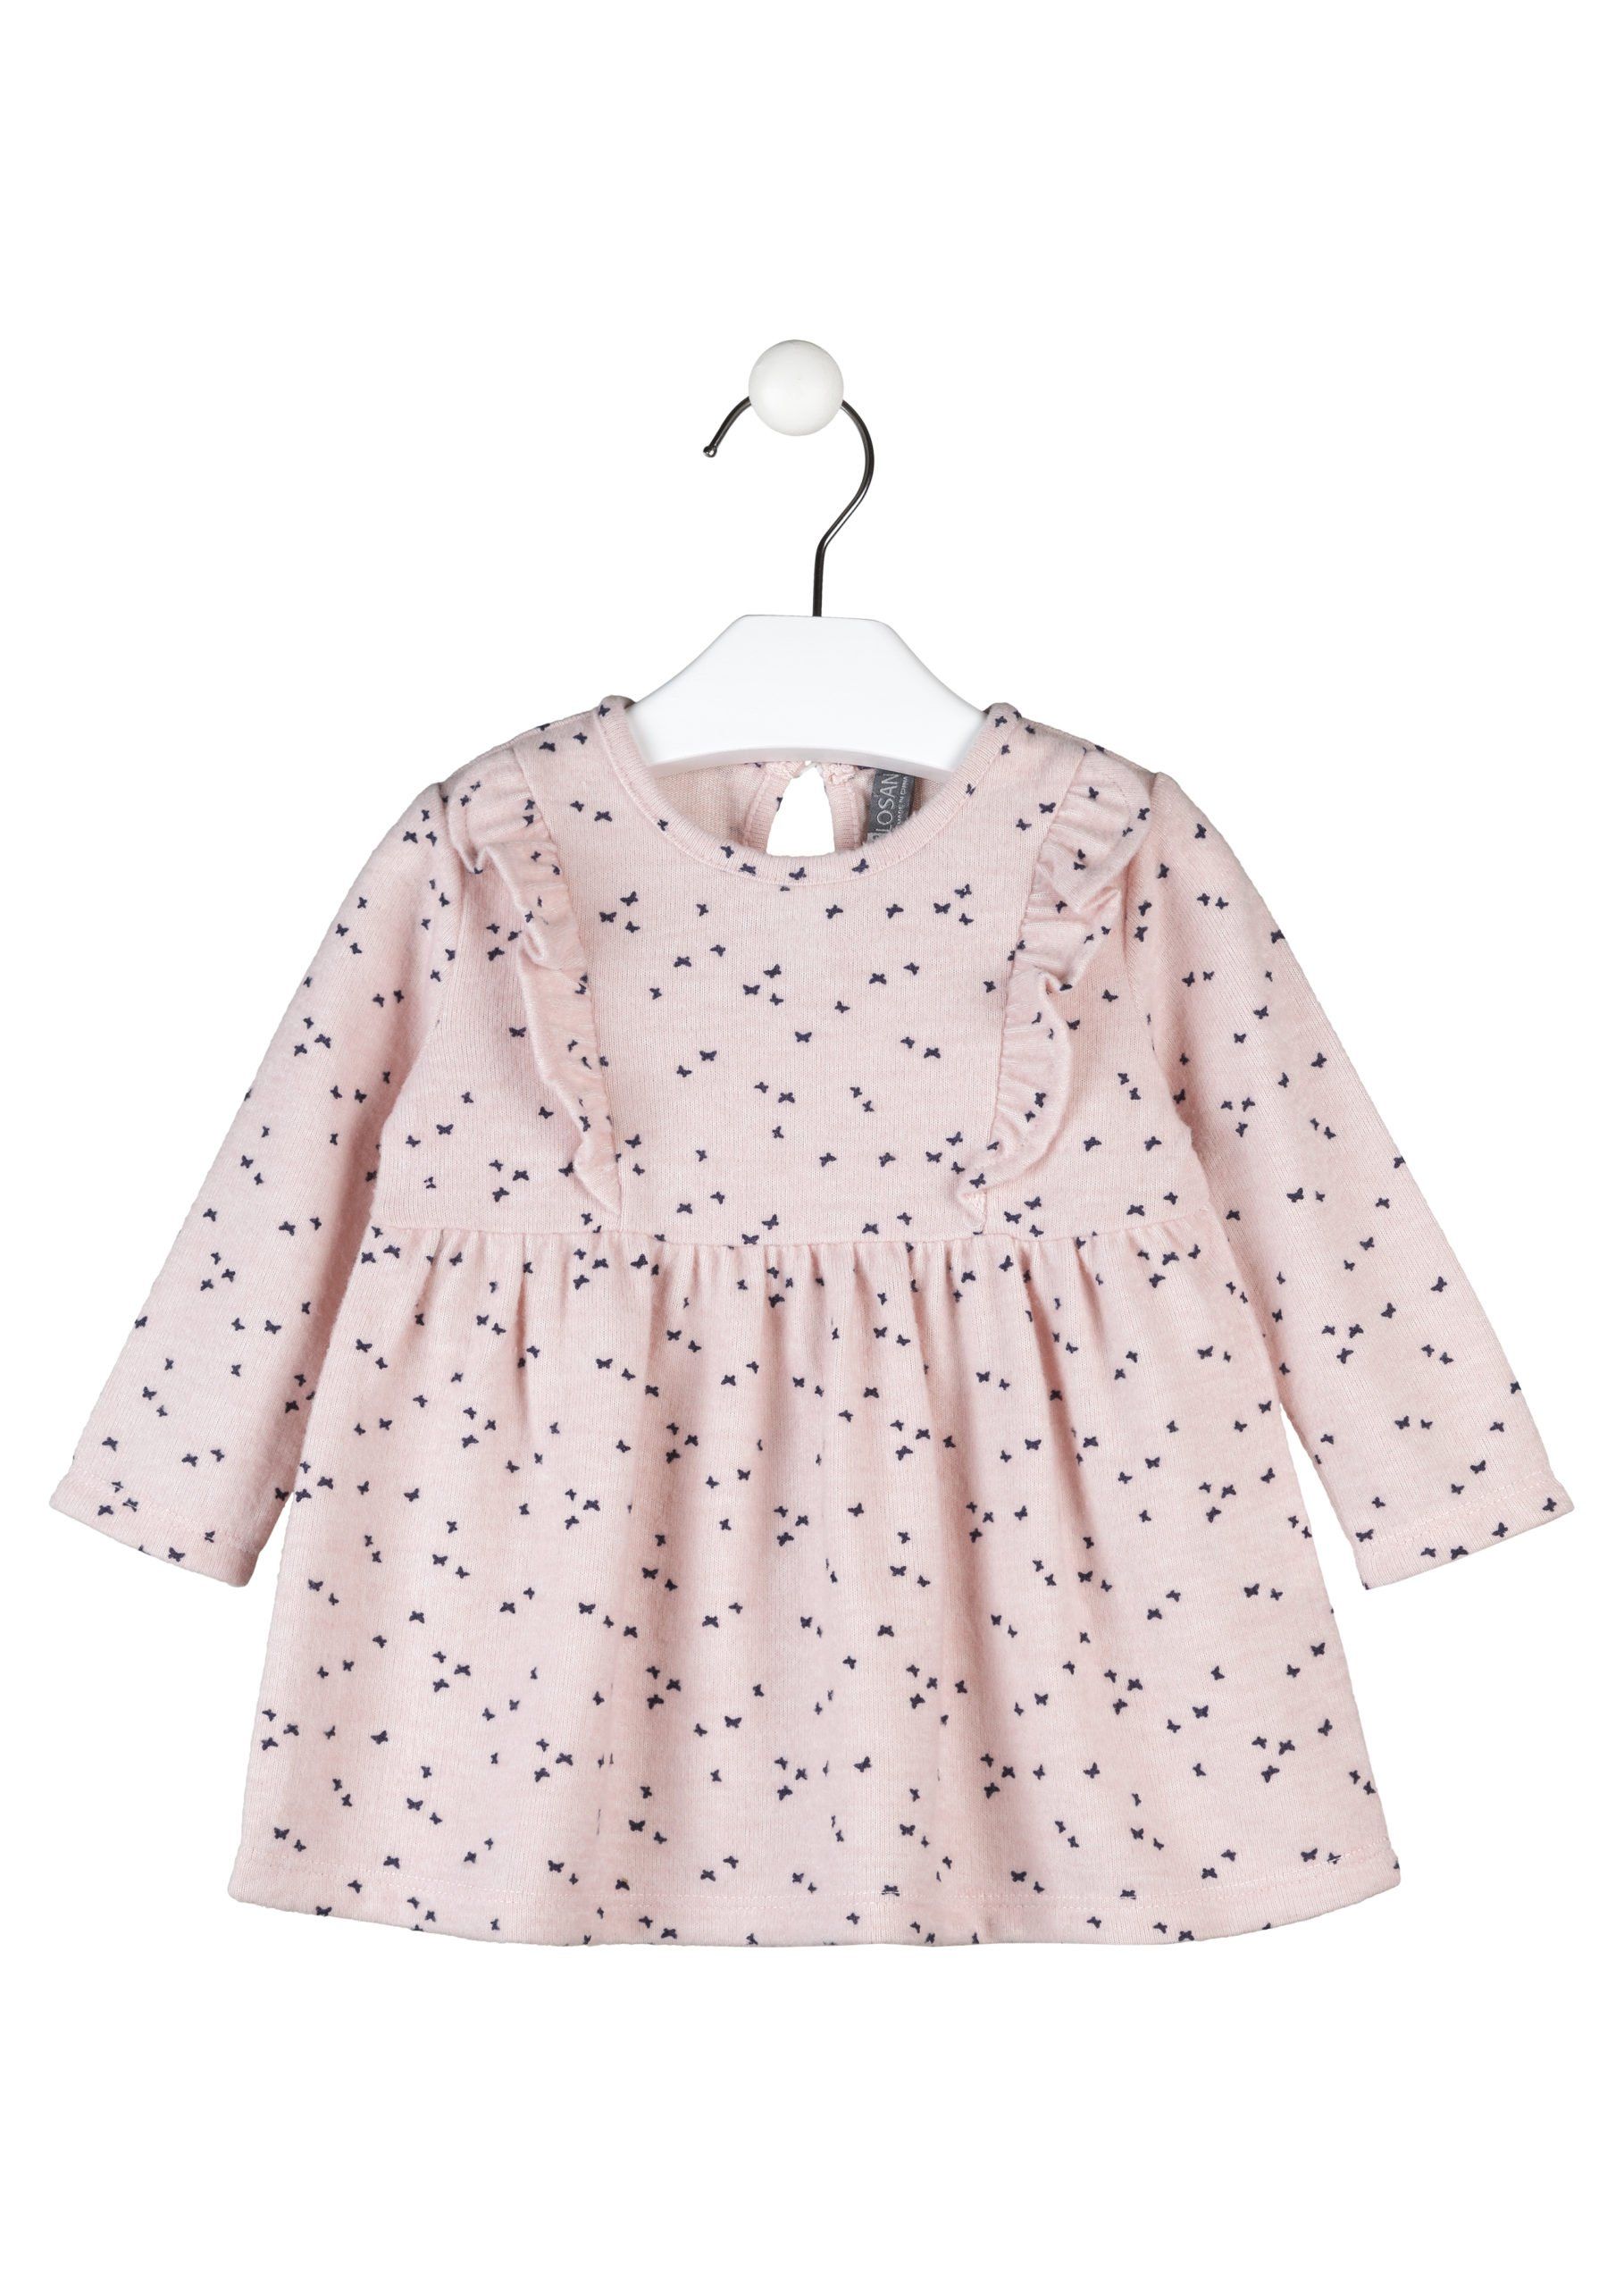 Losan βρεφικό μαλακό φόρεμα ροζ με αστεράκια